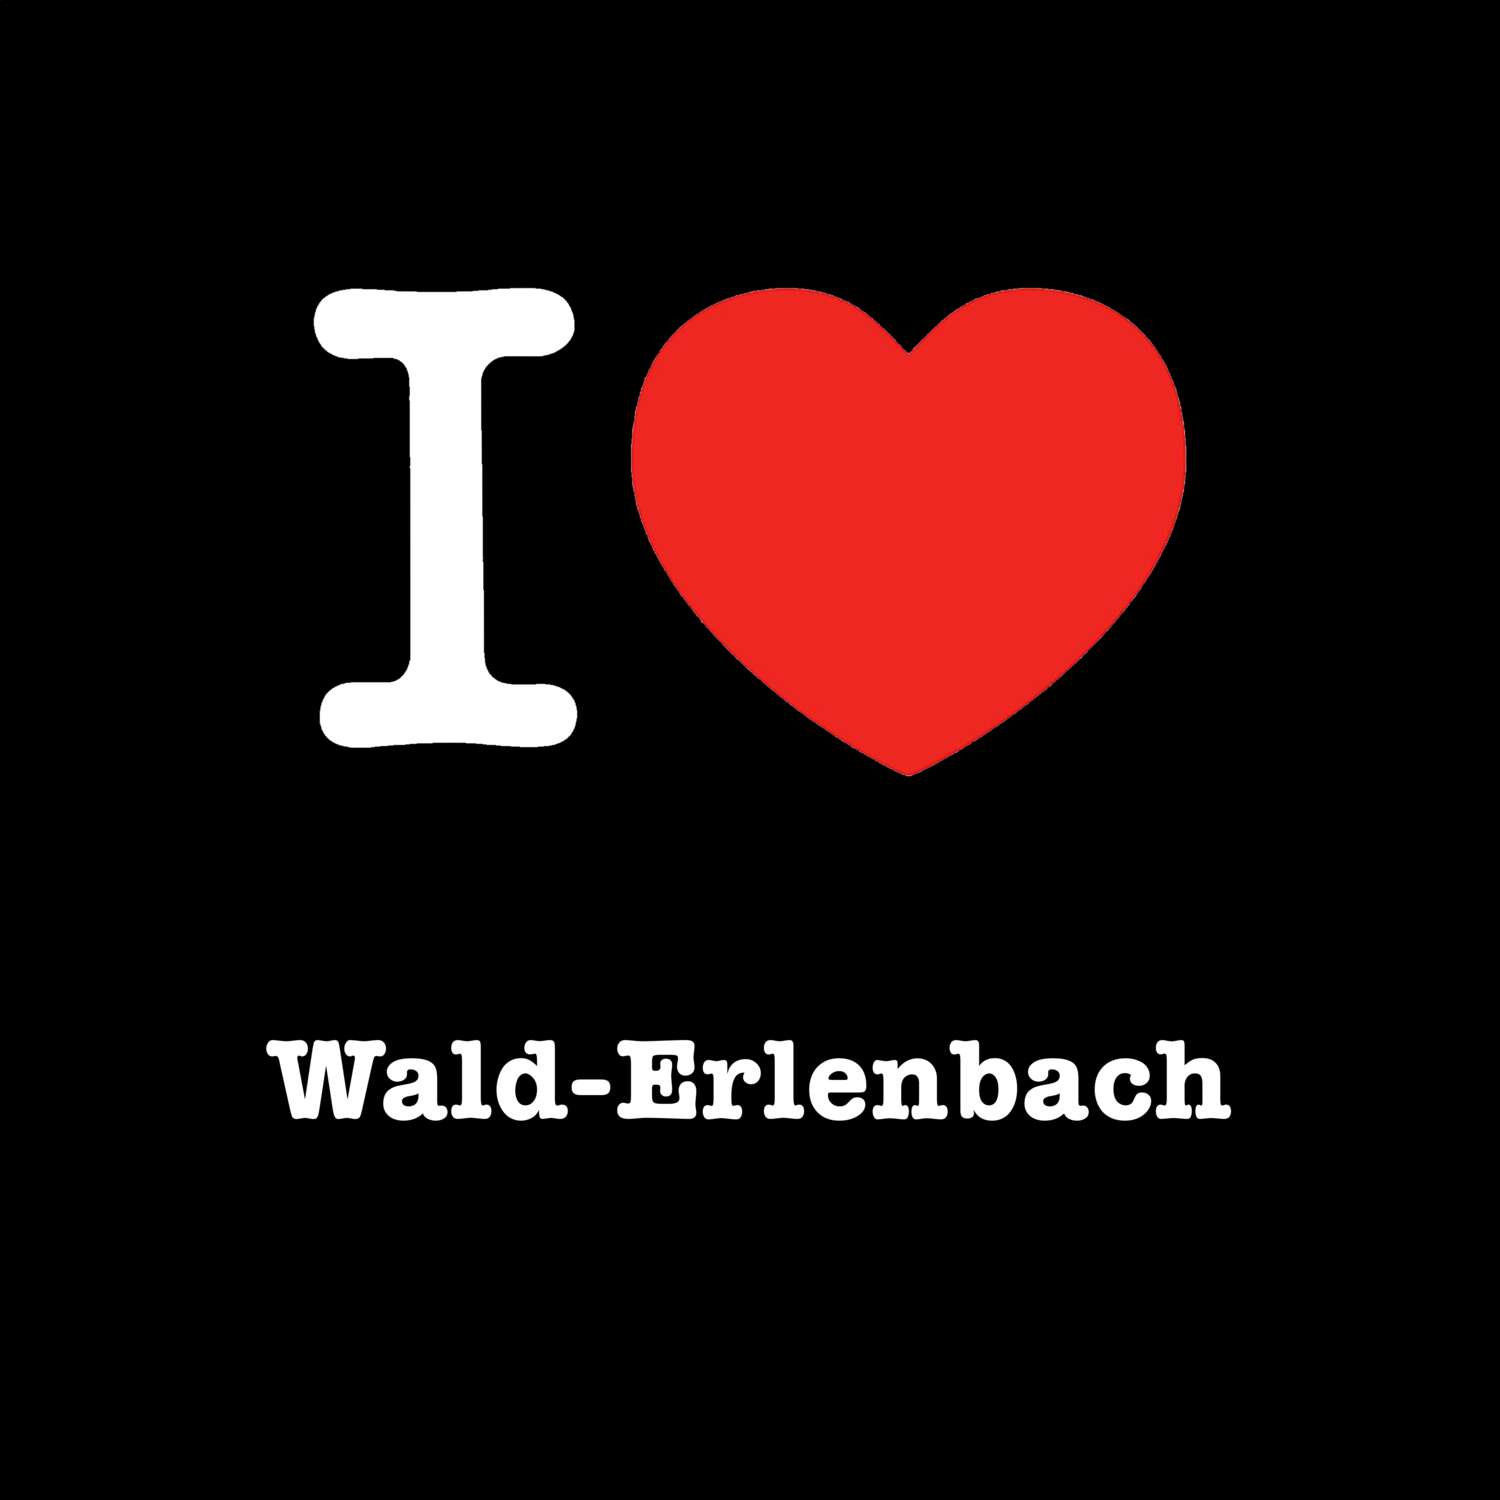 Wald-Erlenbach T-Shirt »I love«